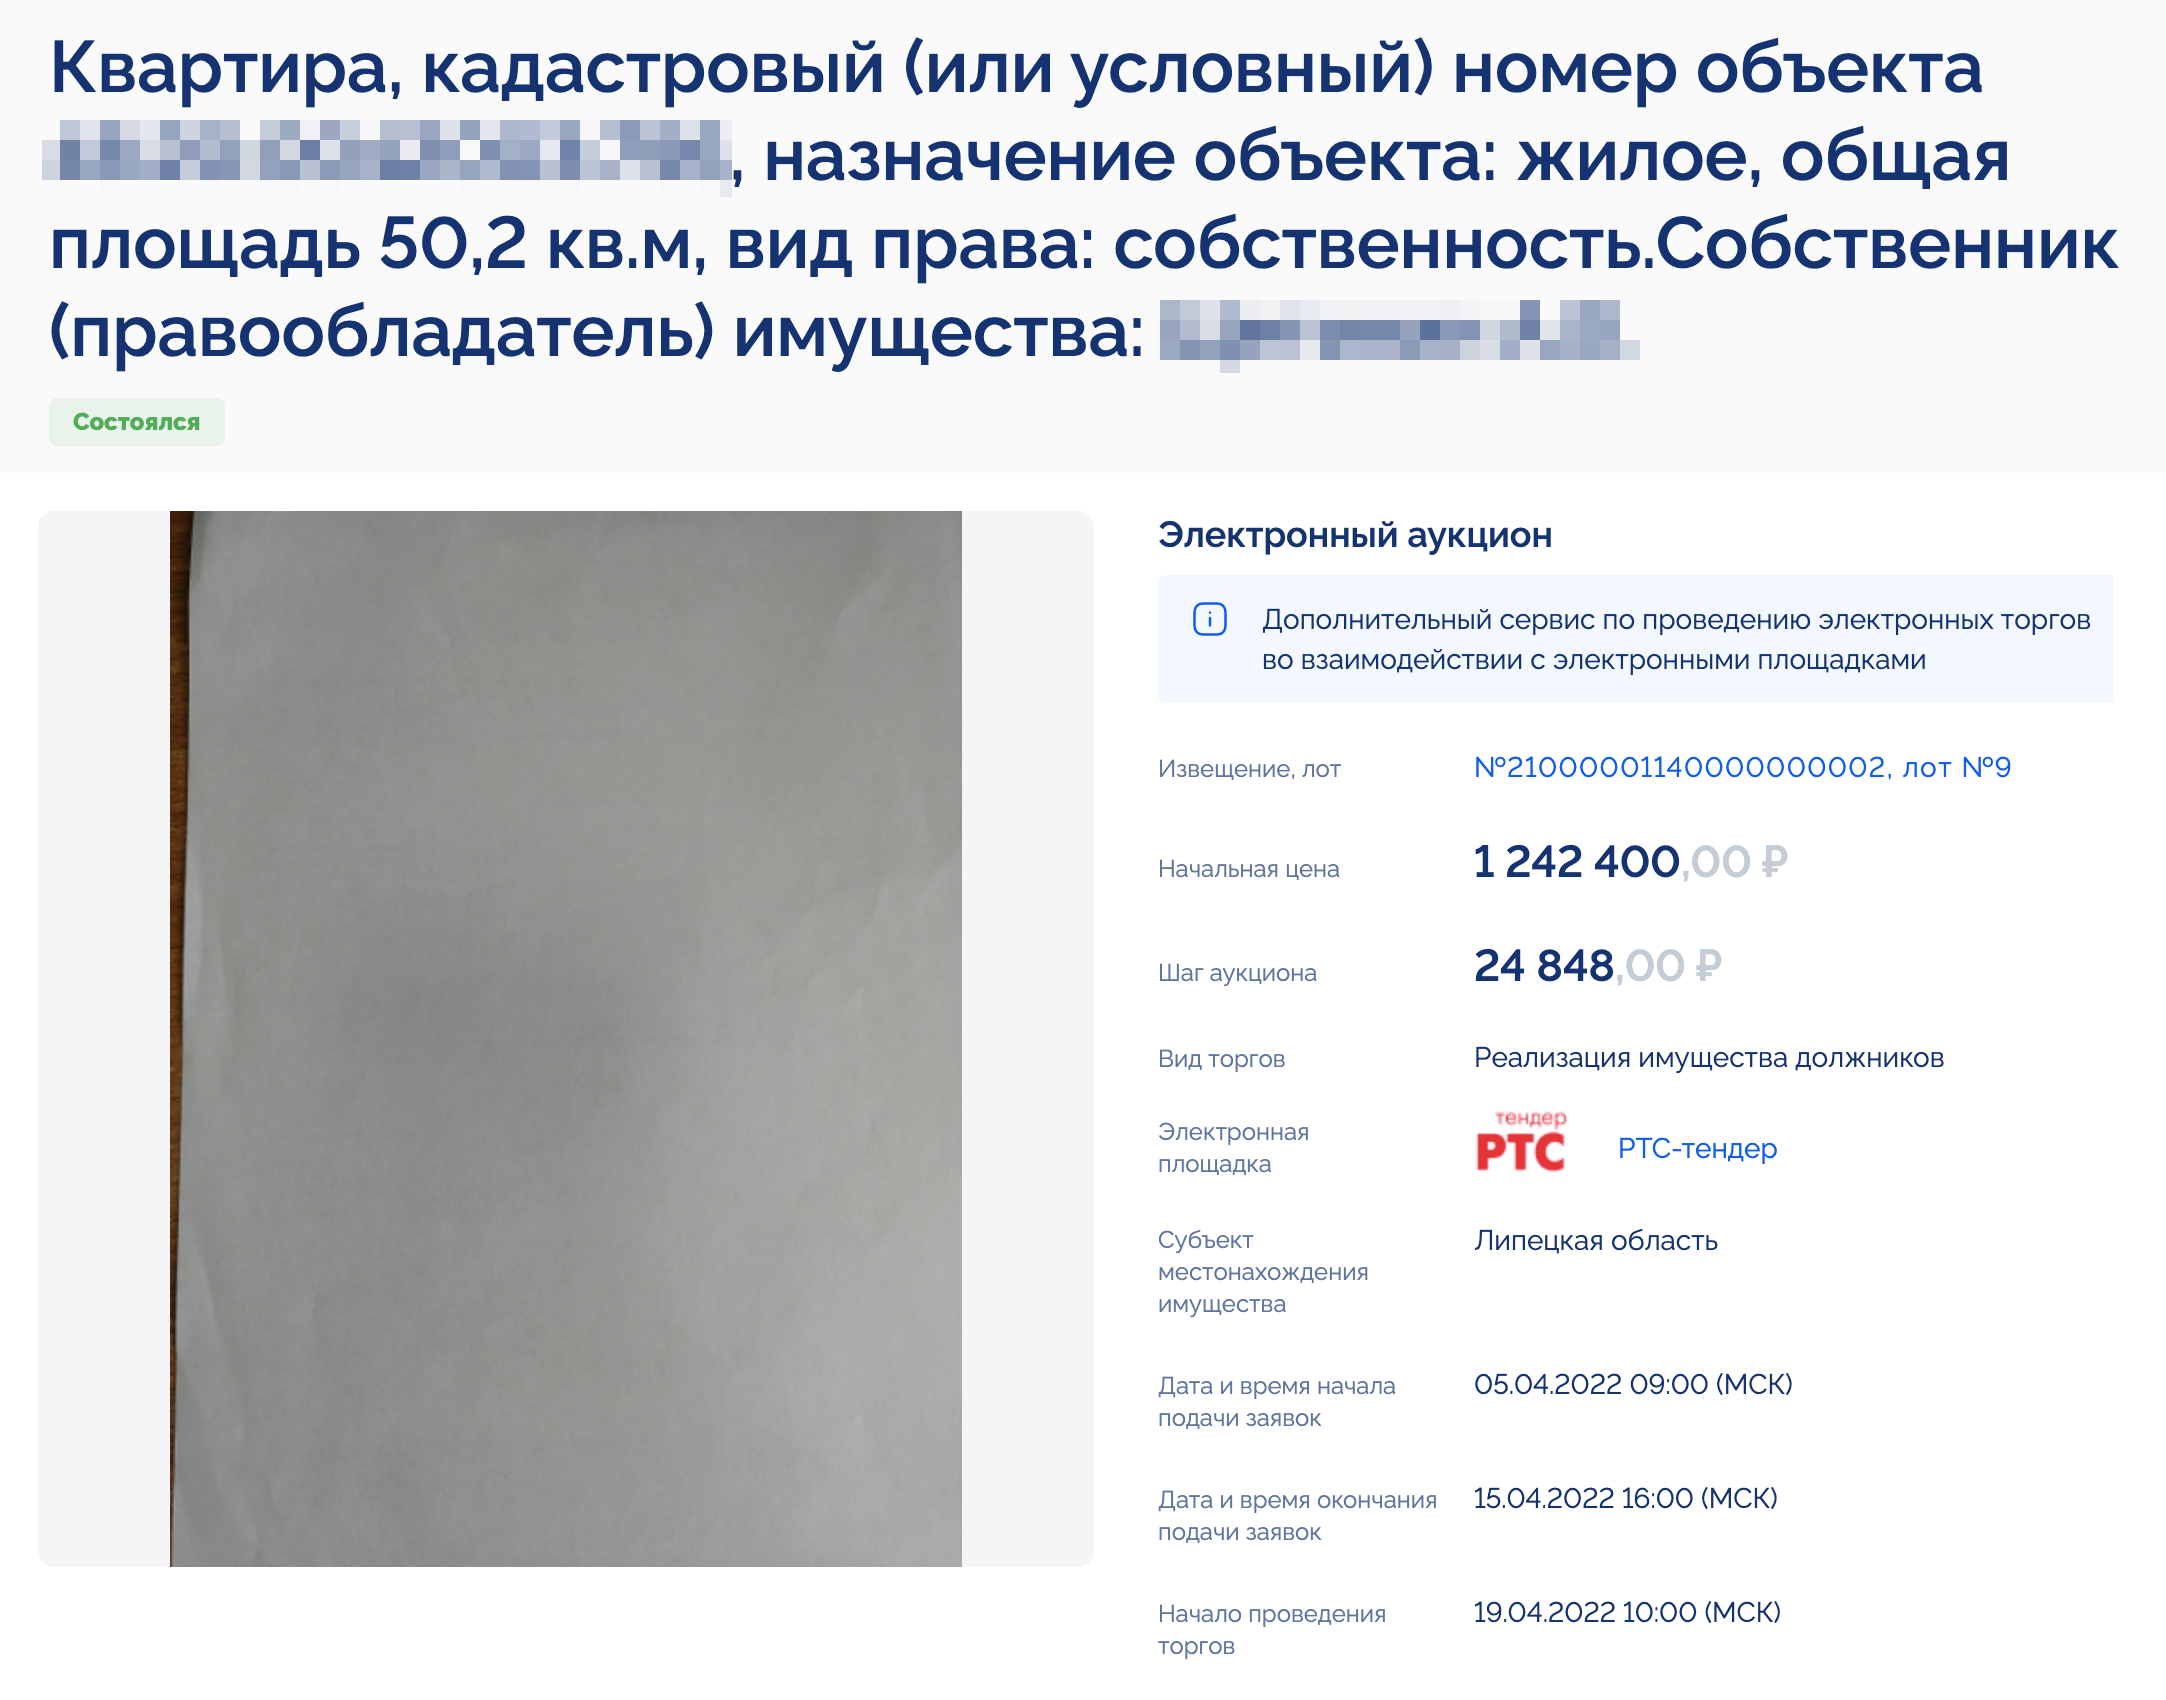 Квартиру в Липецке выставляли на аукцион по цене 1 242 400 ₽, а выкупили за 1 292 096 ₽. Источник: torgi.gov.ru